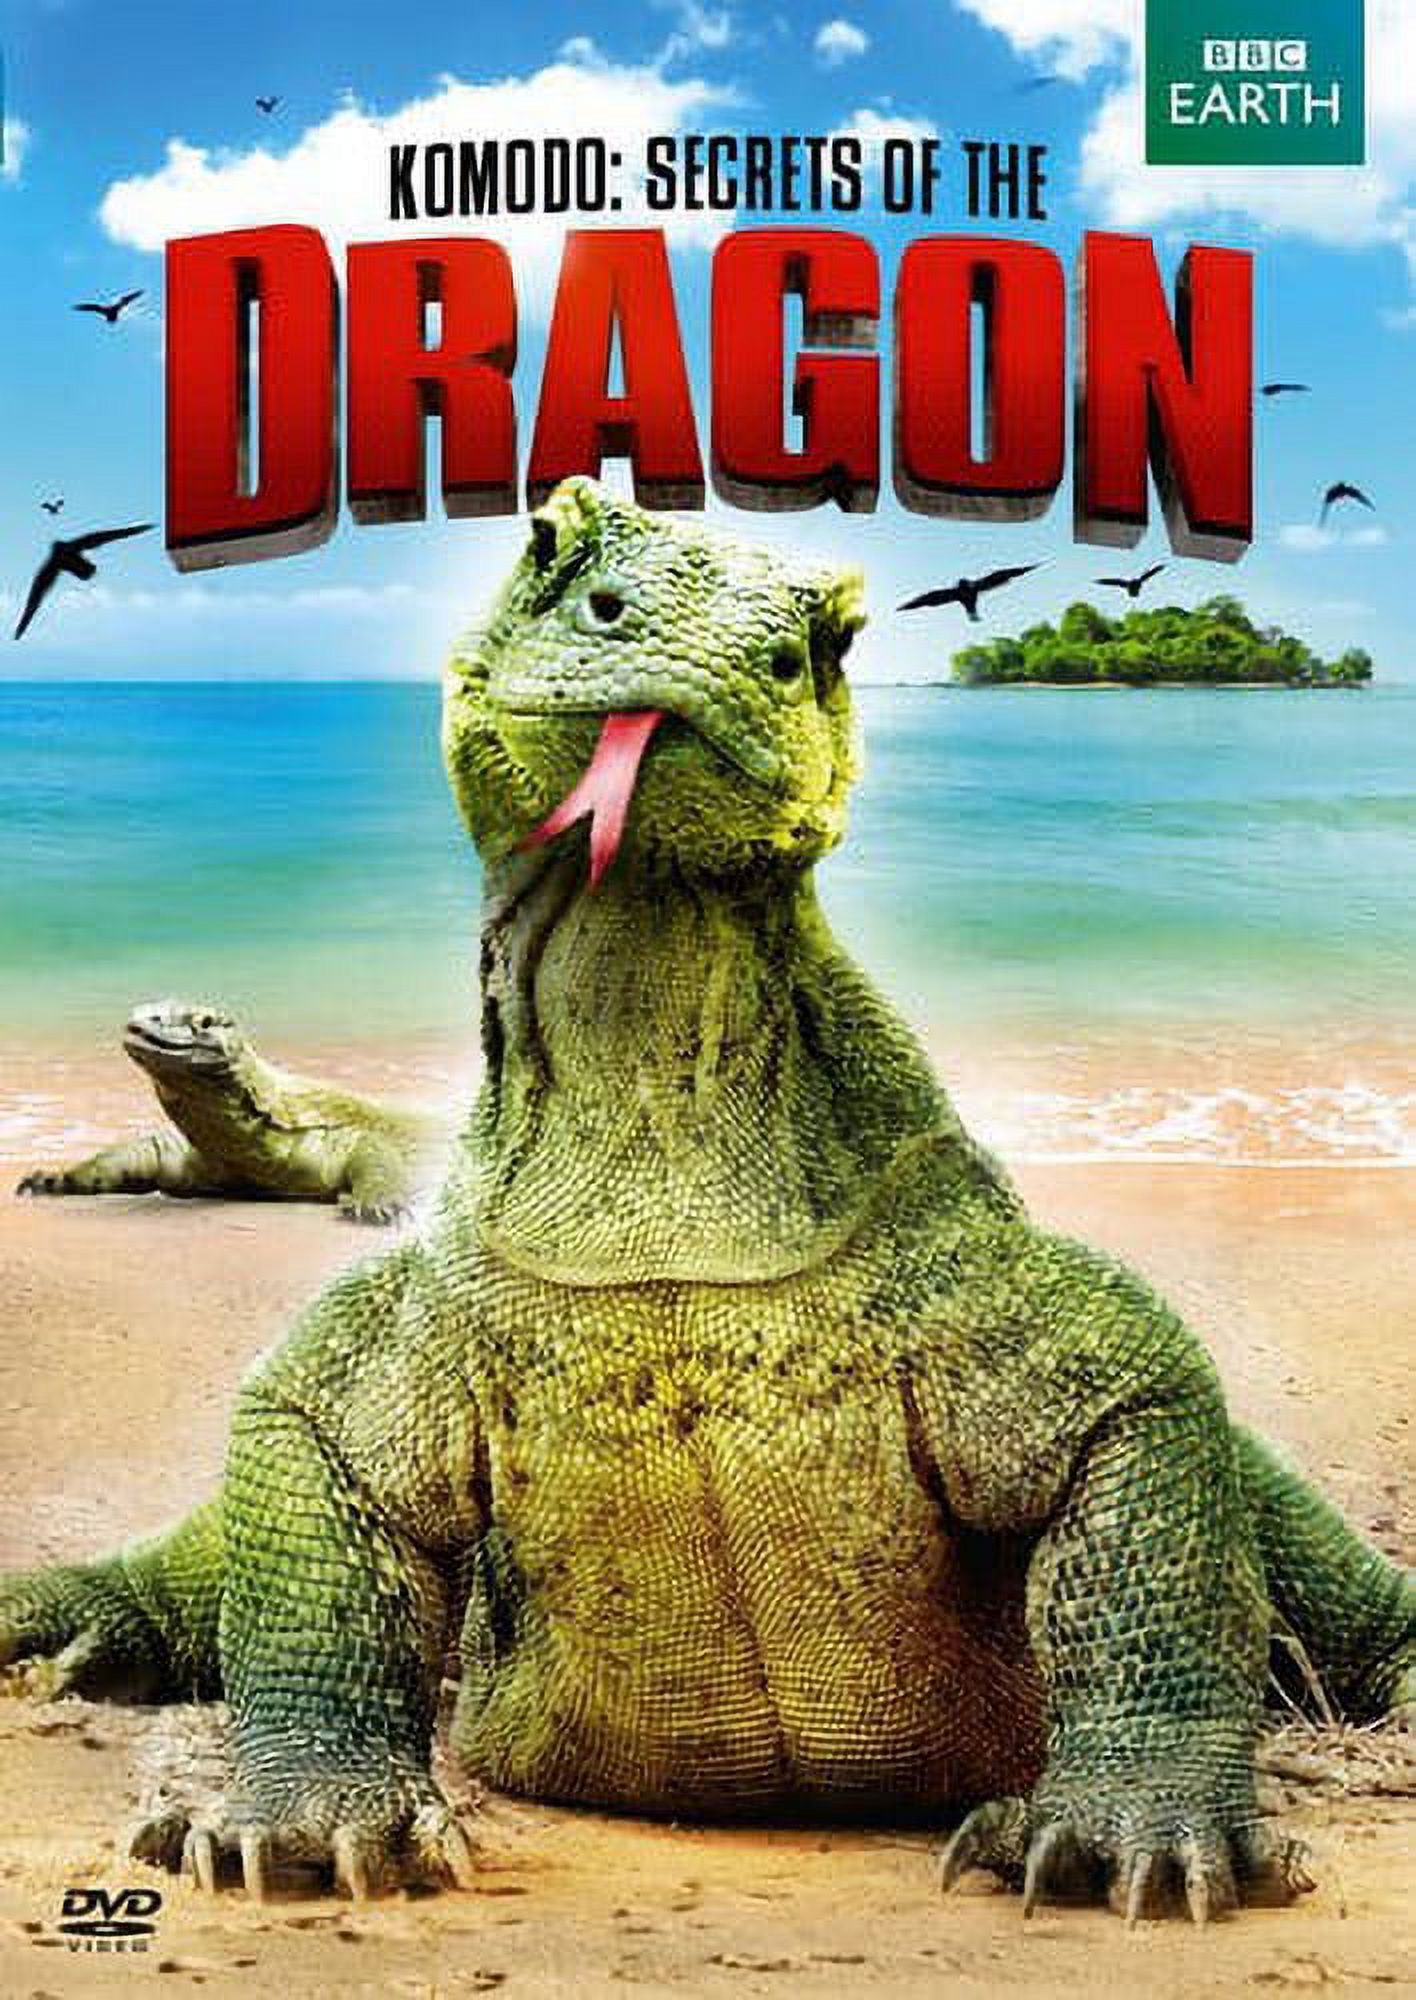 Komodo - Secrets of the Dragon (DVD) - image 1 of 1